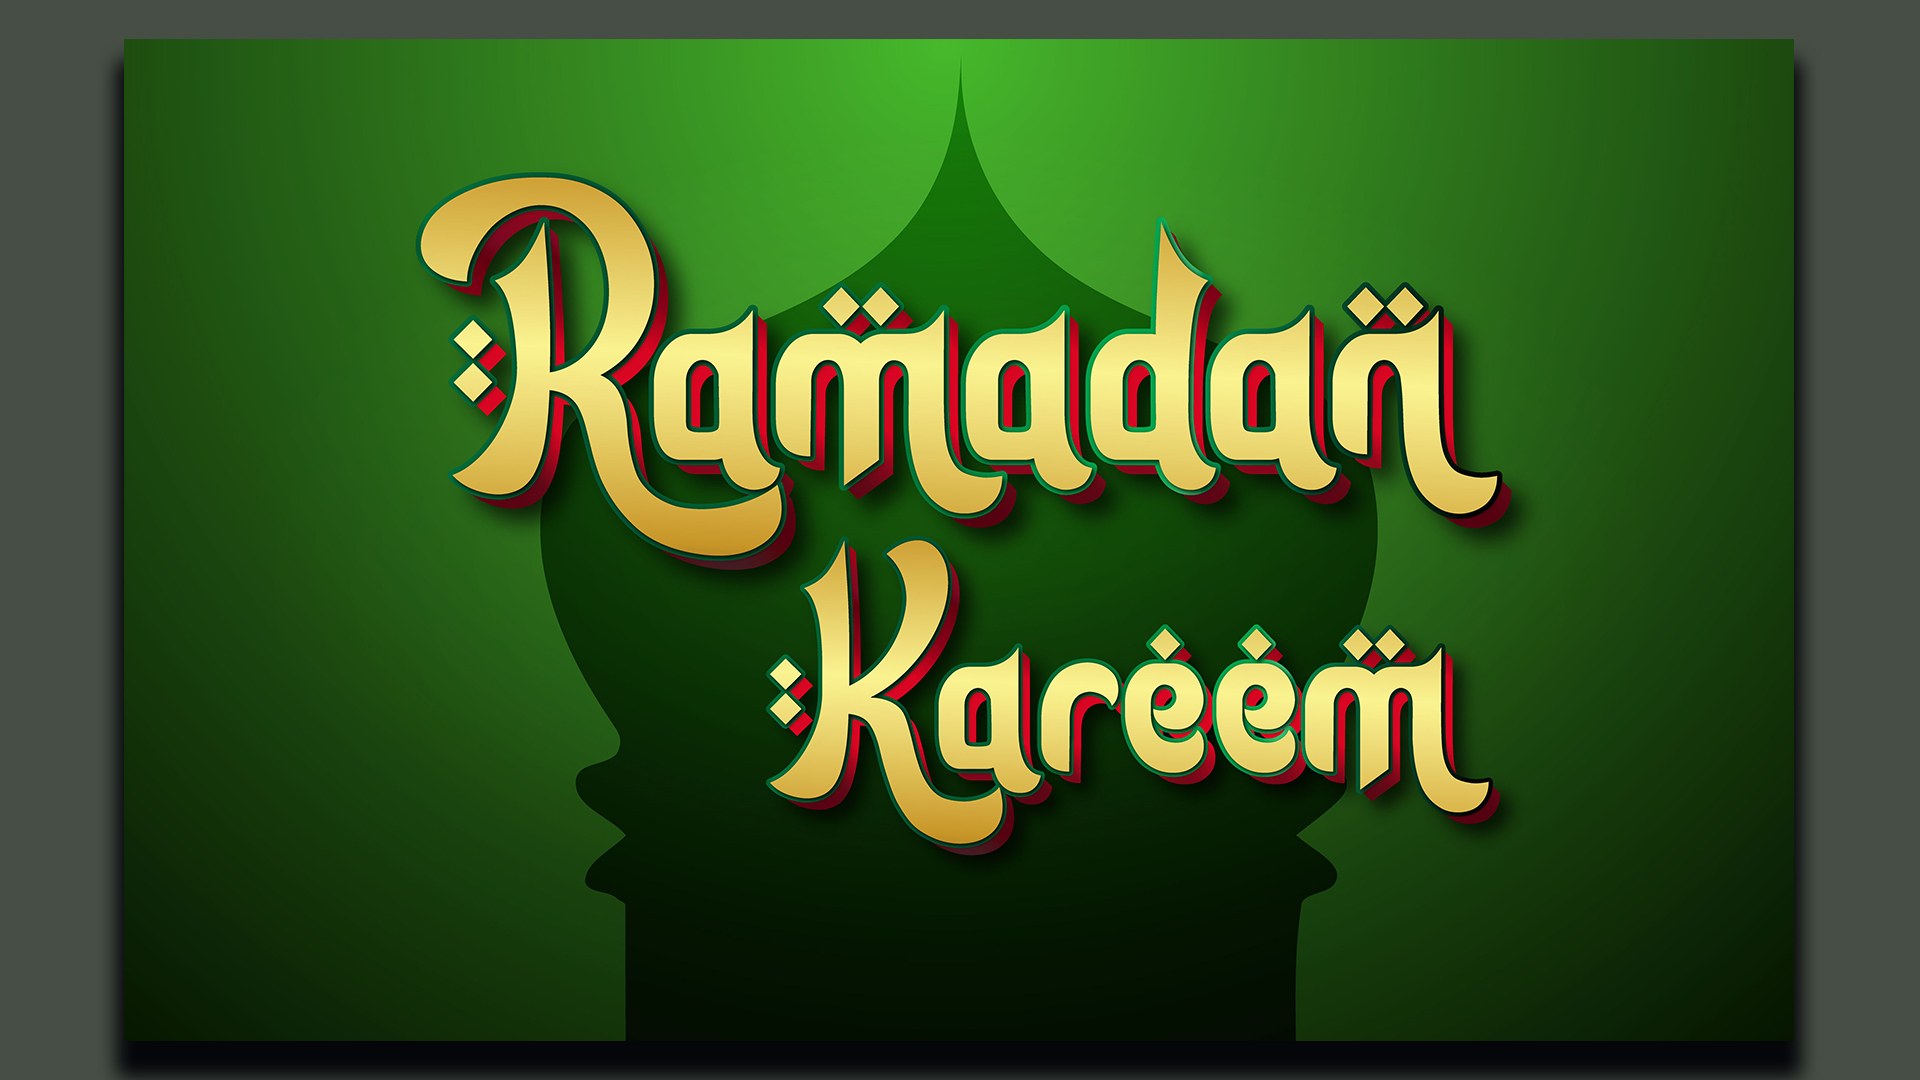 Ramadan kareem with a green background.